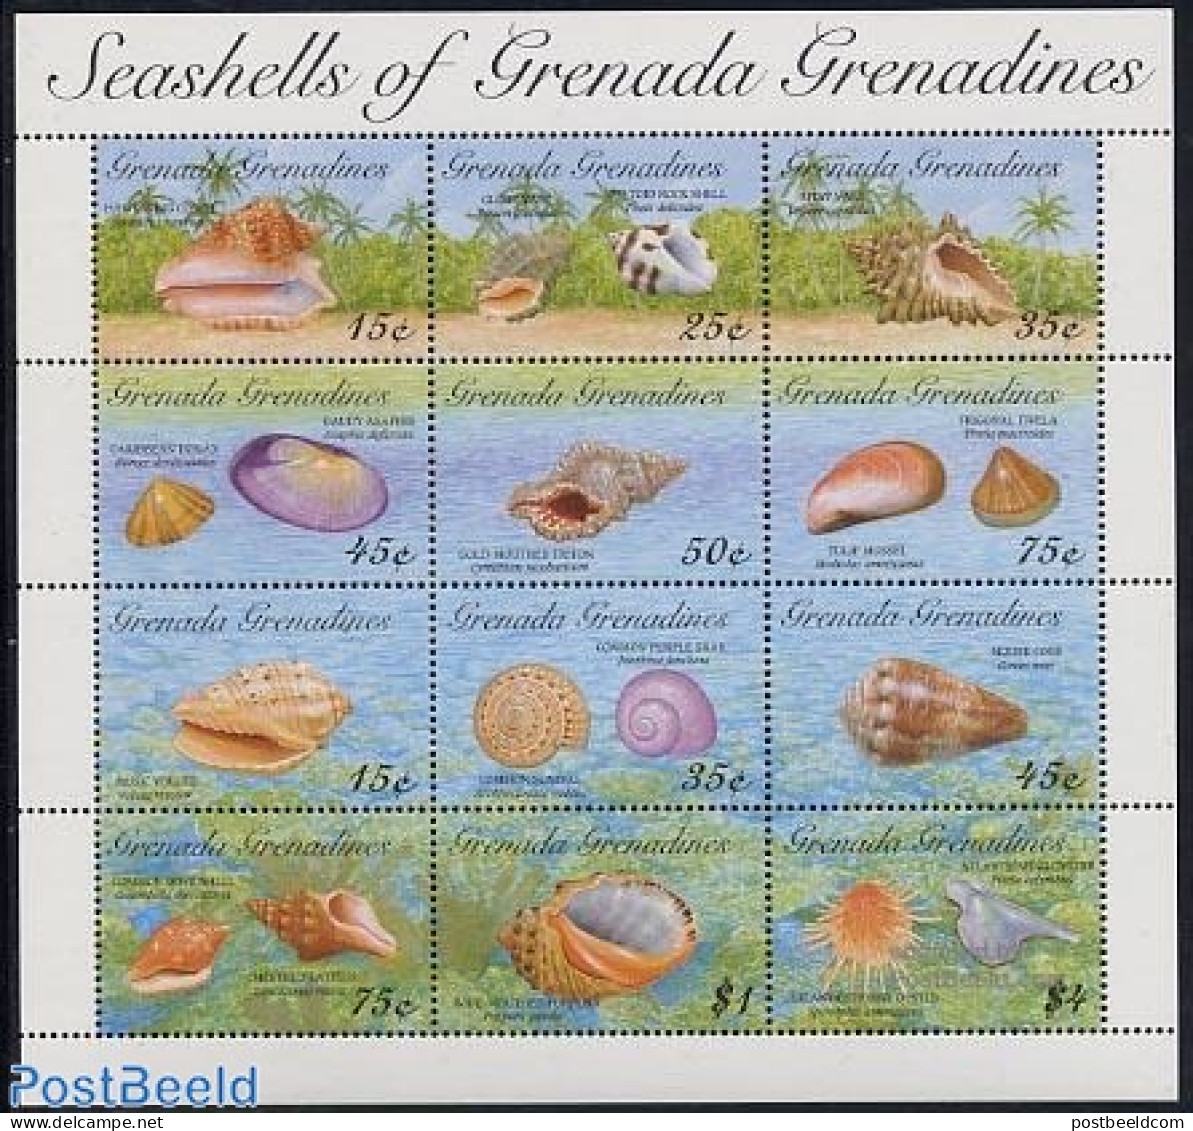 Grenada Grenadines 1993 Shells 12v M/s, Mint NH, Nature - Shells & Crustaceans - Marine Life